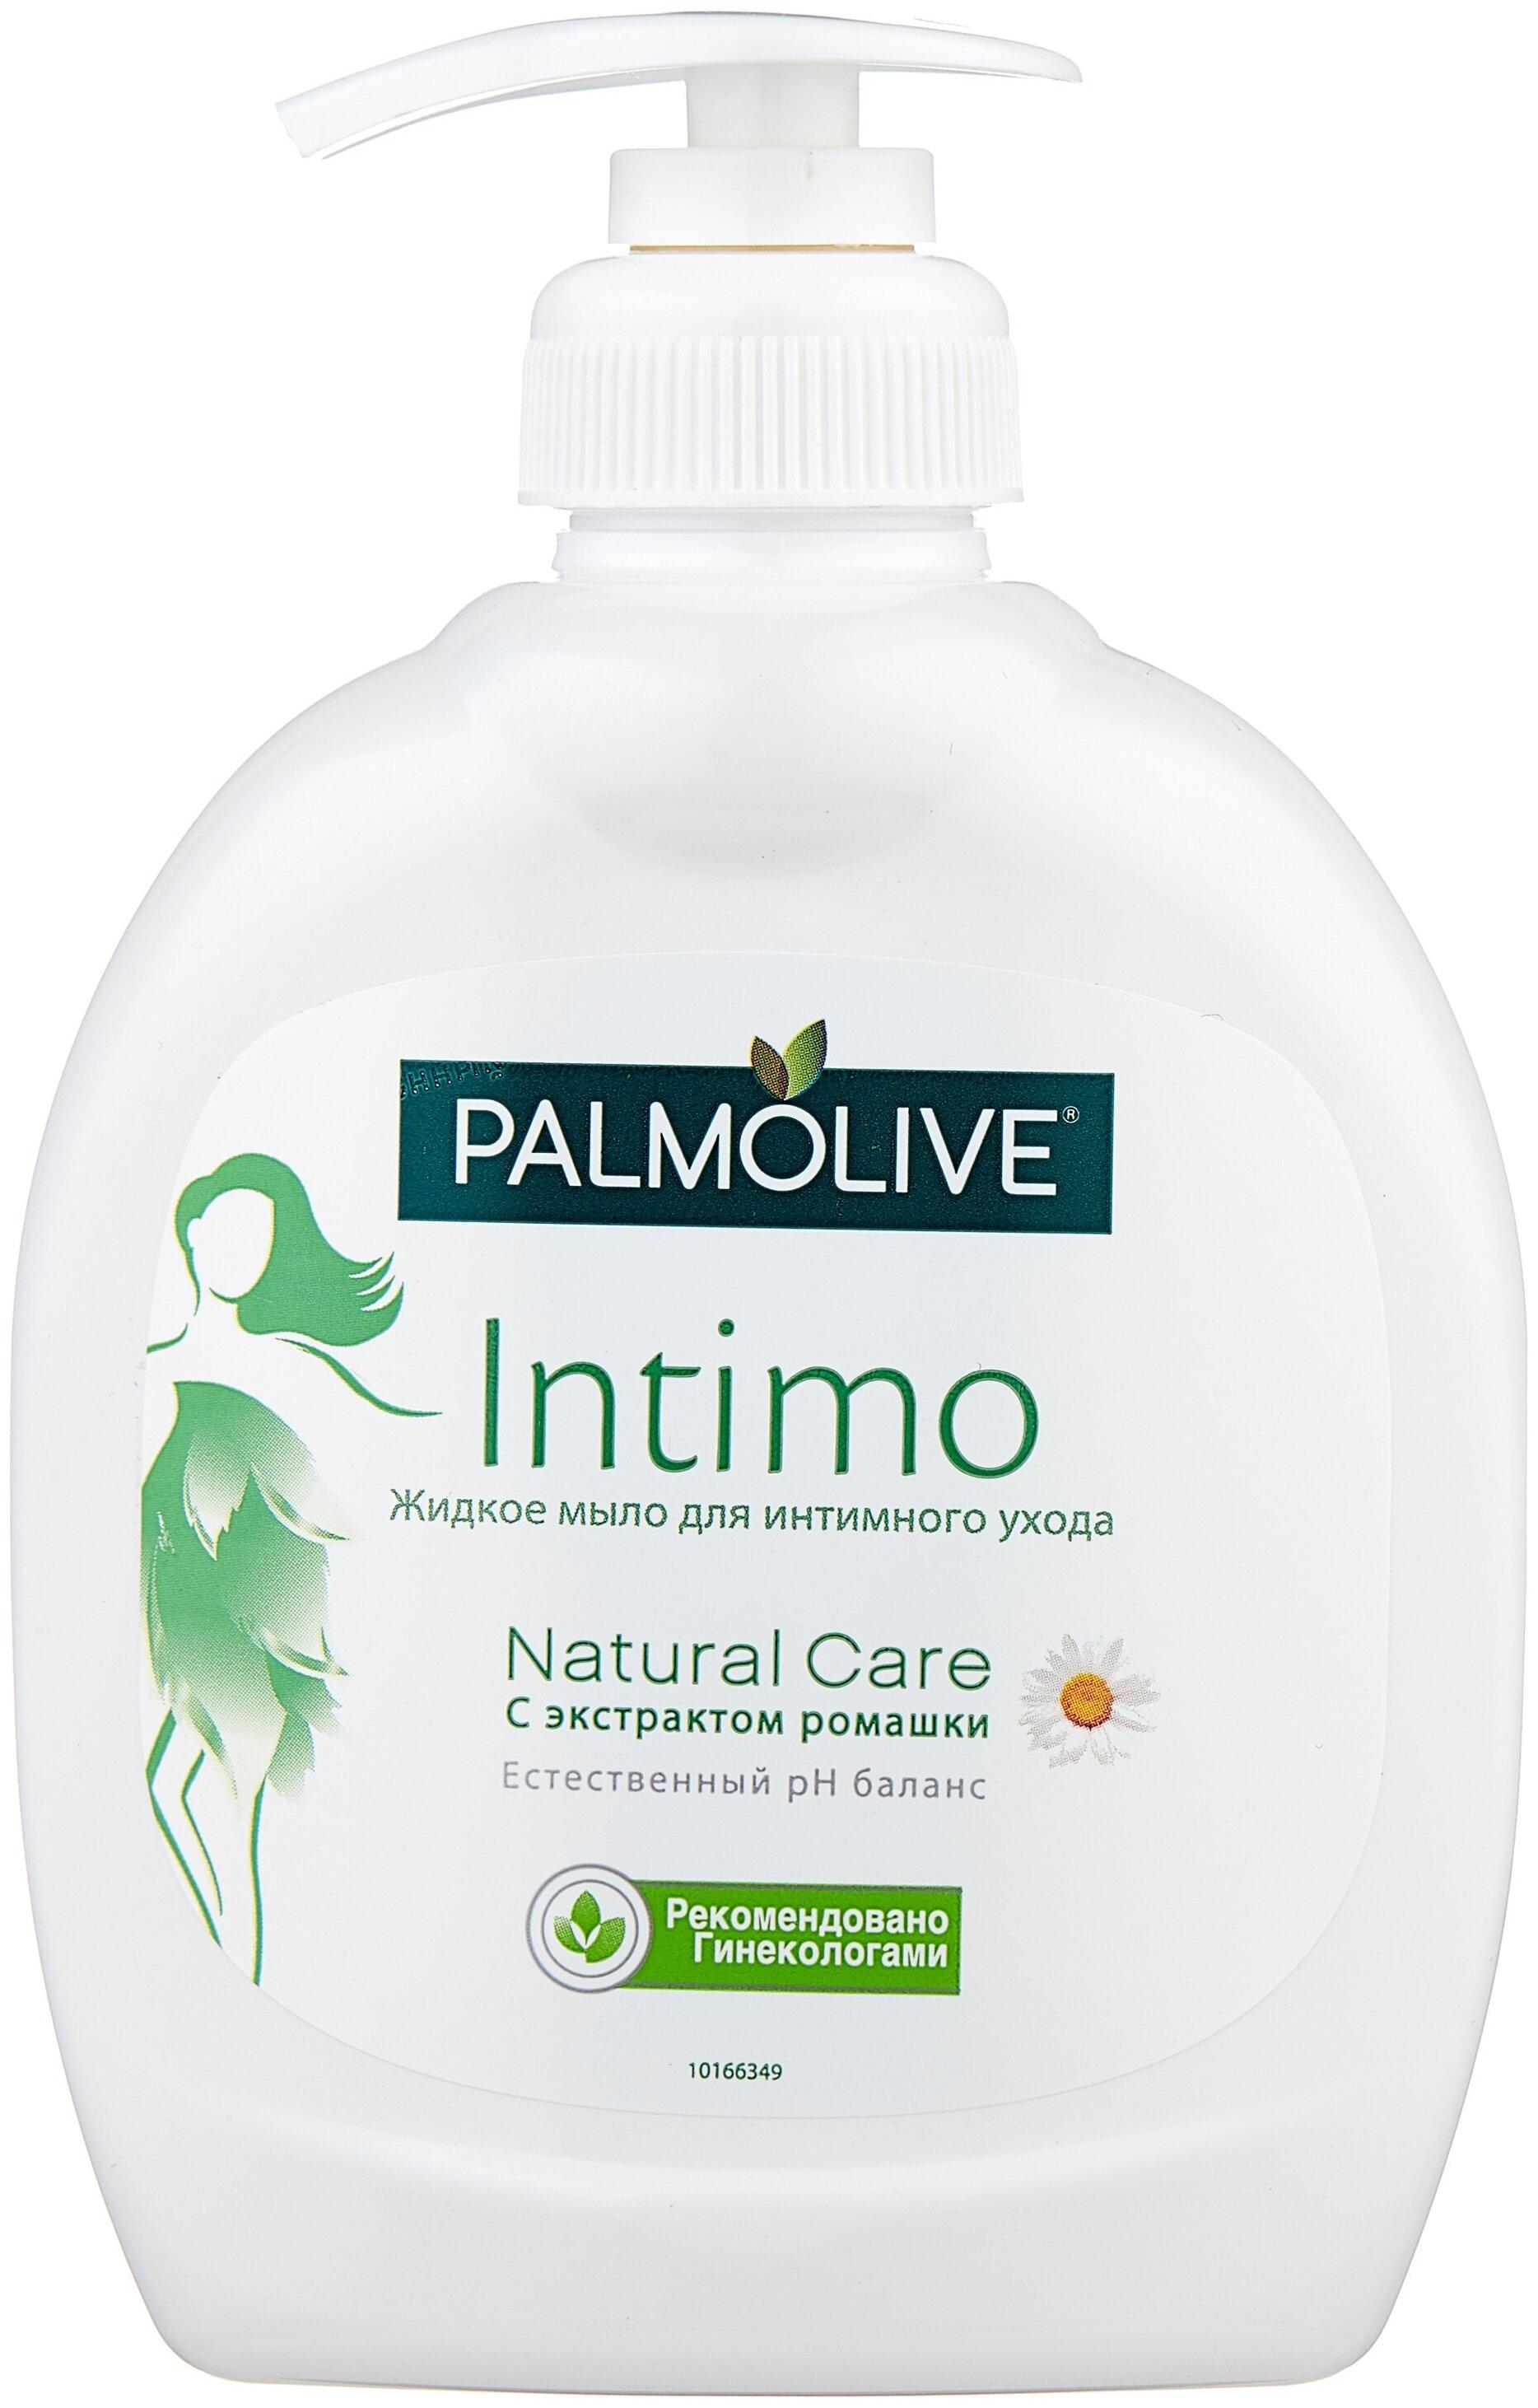 Palmolive Intimo Natural Care с экстрактом ромашки